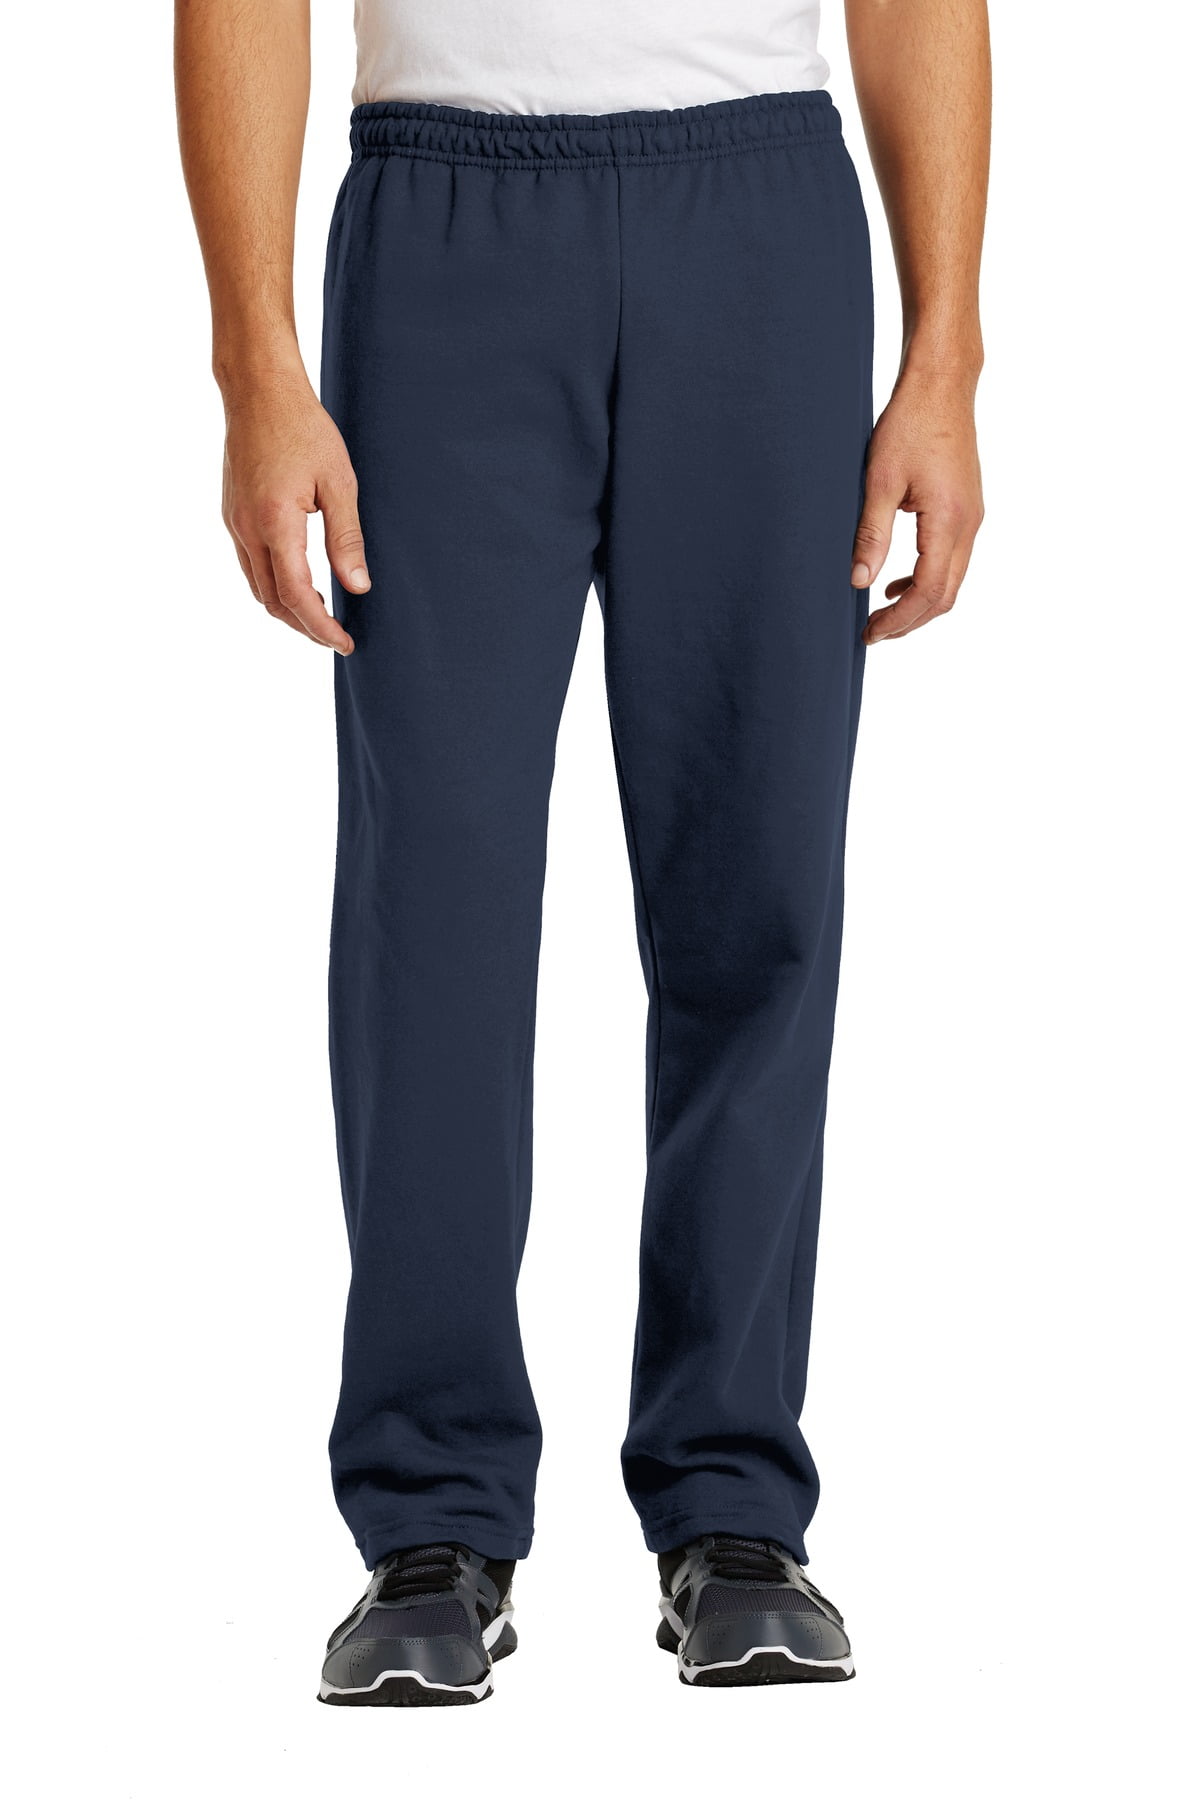 Gildan Men's Heavy Blend Open Bottom Sweatpant - 18400 - Walmart.com